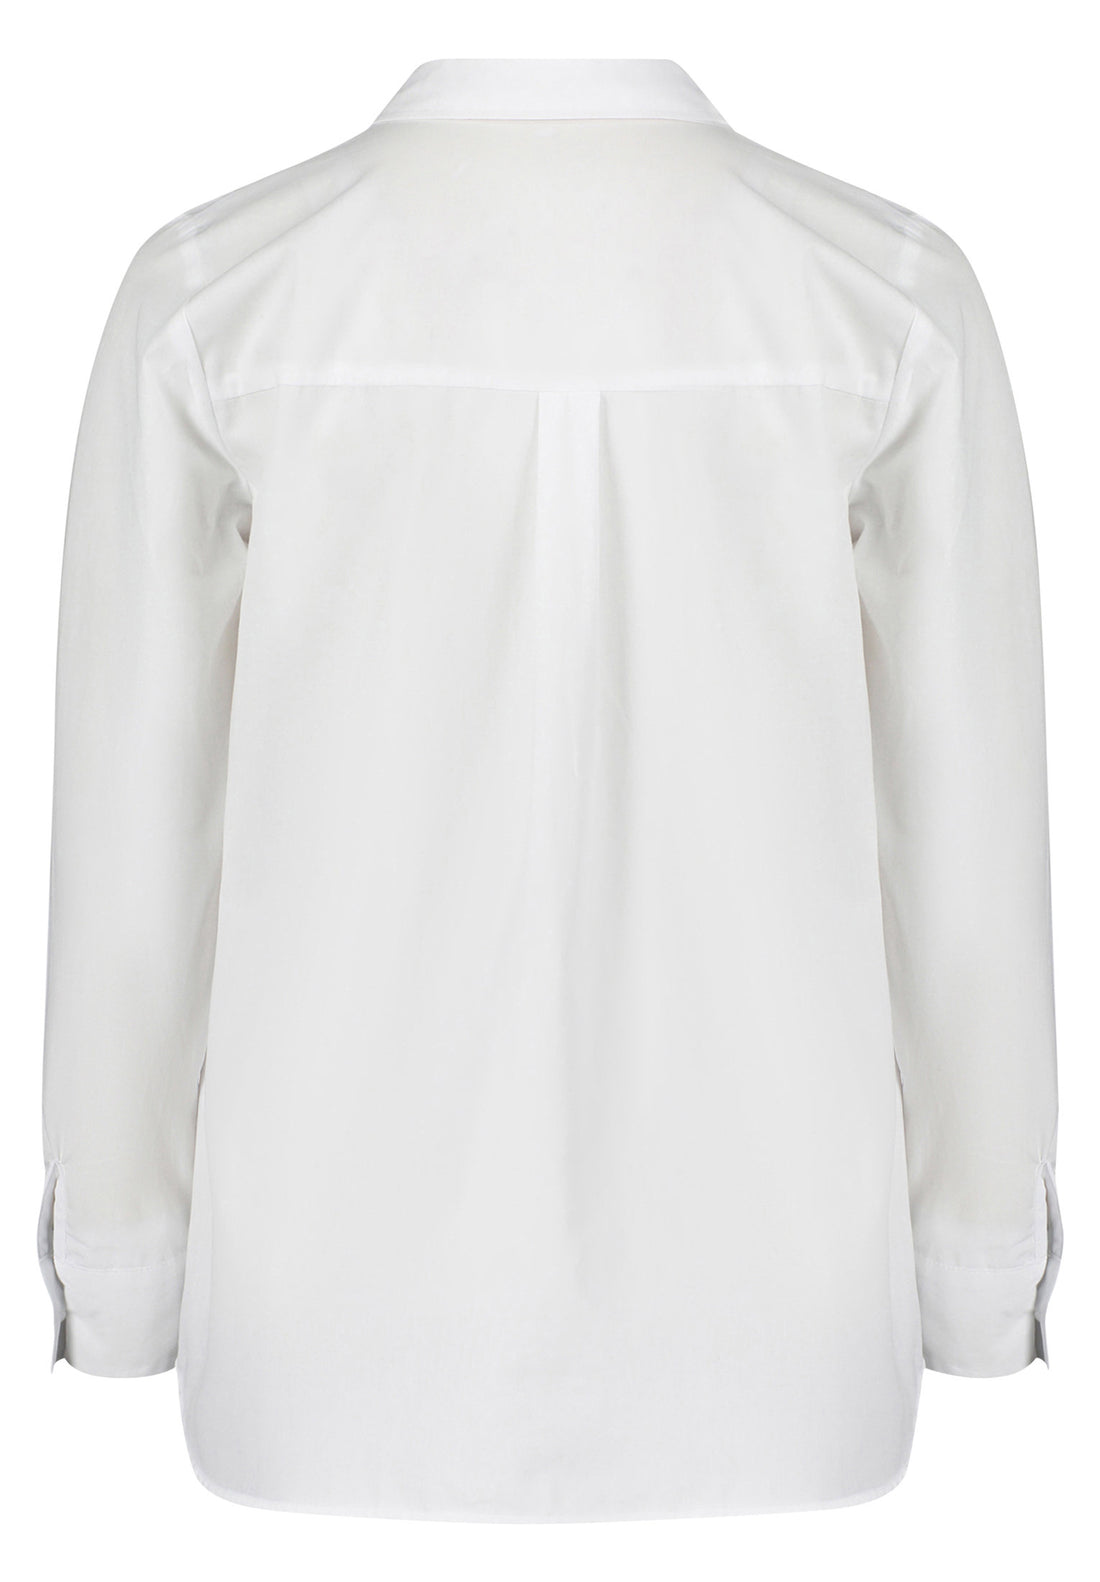 White Shirt Style Blouse_8631-1094_1000_02